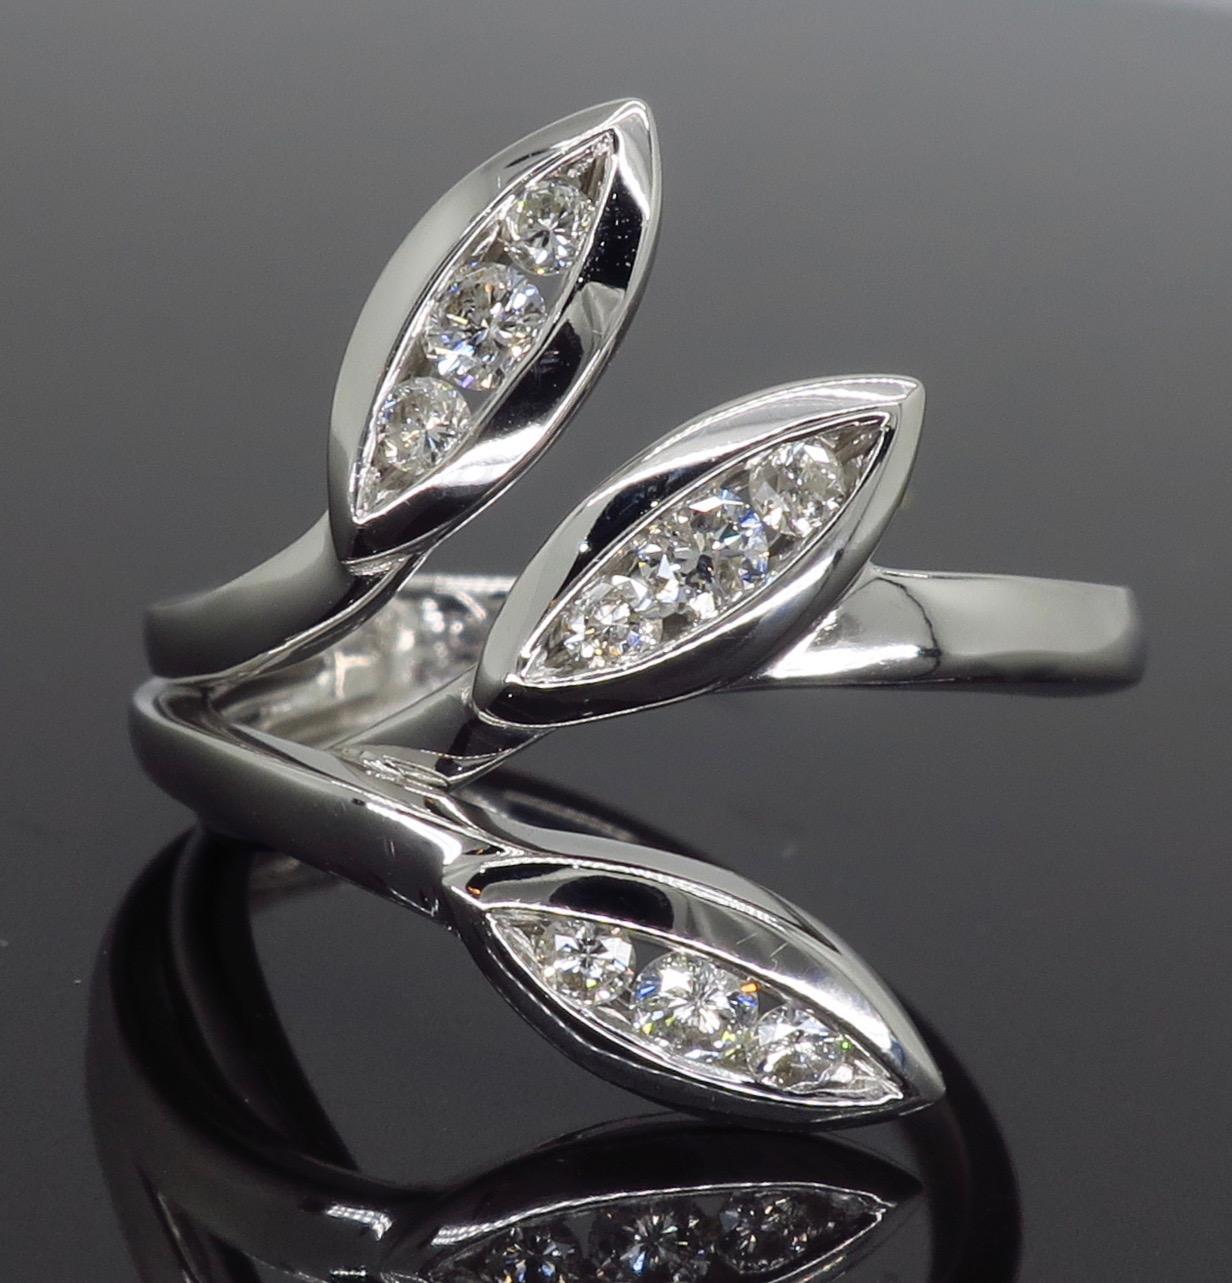 This 18K white gold diamond ring features 9 round brilliant cut diamonds set into a unique asymmetrical design. 

Diamond Cut: 9 Round Brilliant Cut 
Average Diamond Color: G-J
Average Diamond Clarity:  SI-I
Diamond Carat Weight:  .31CTW
Metal: 18K